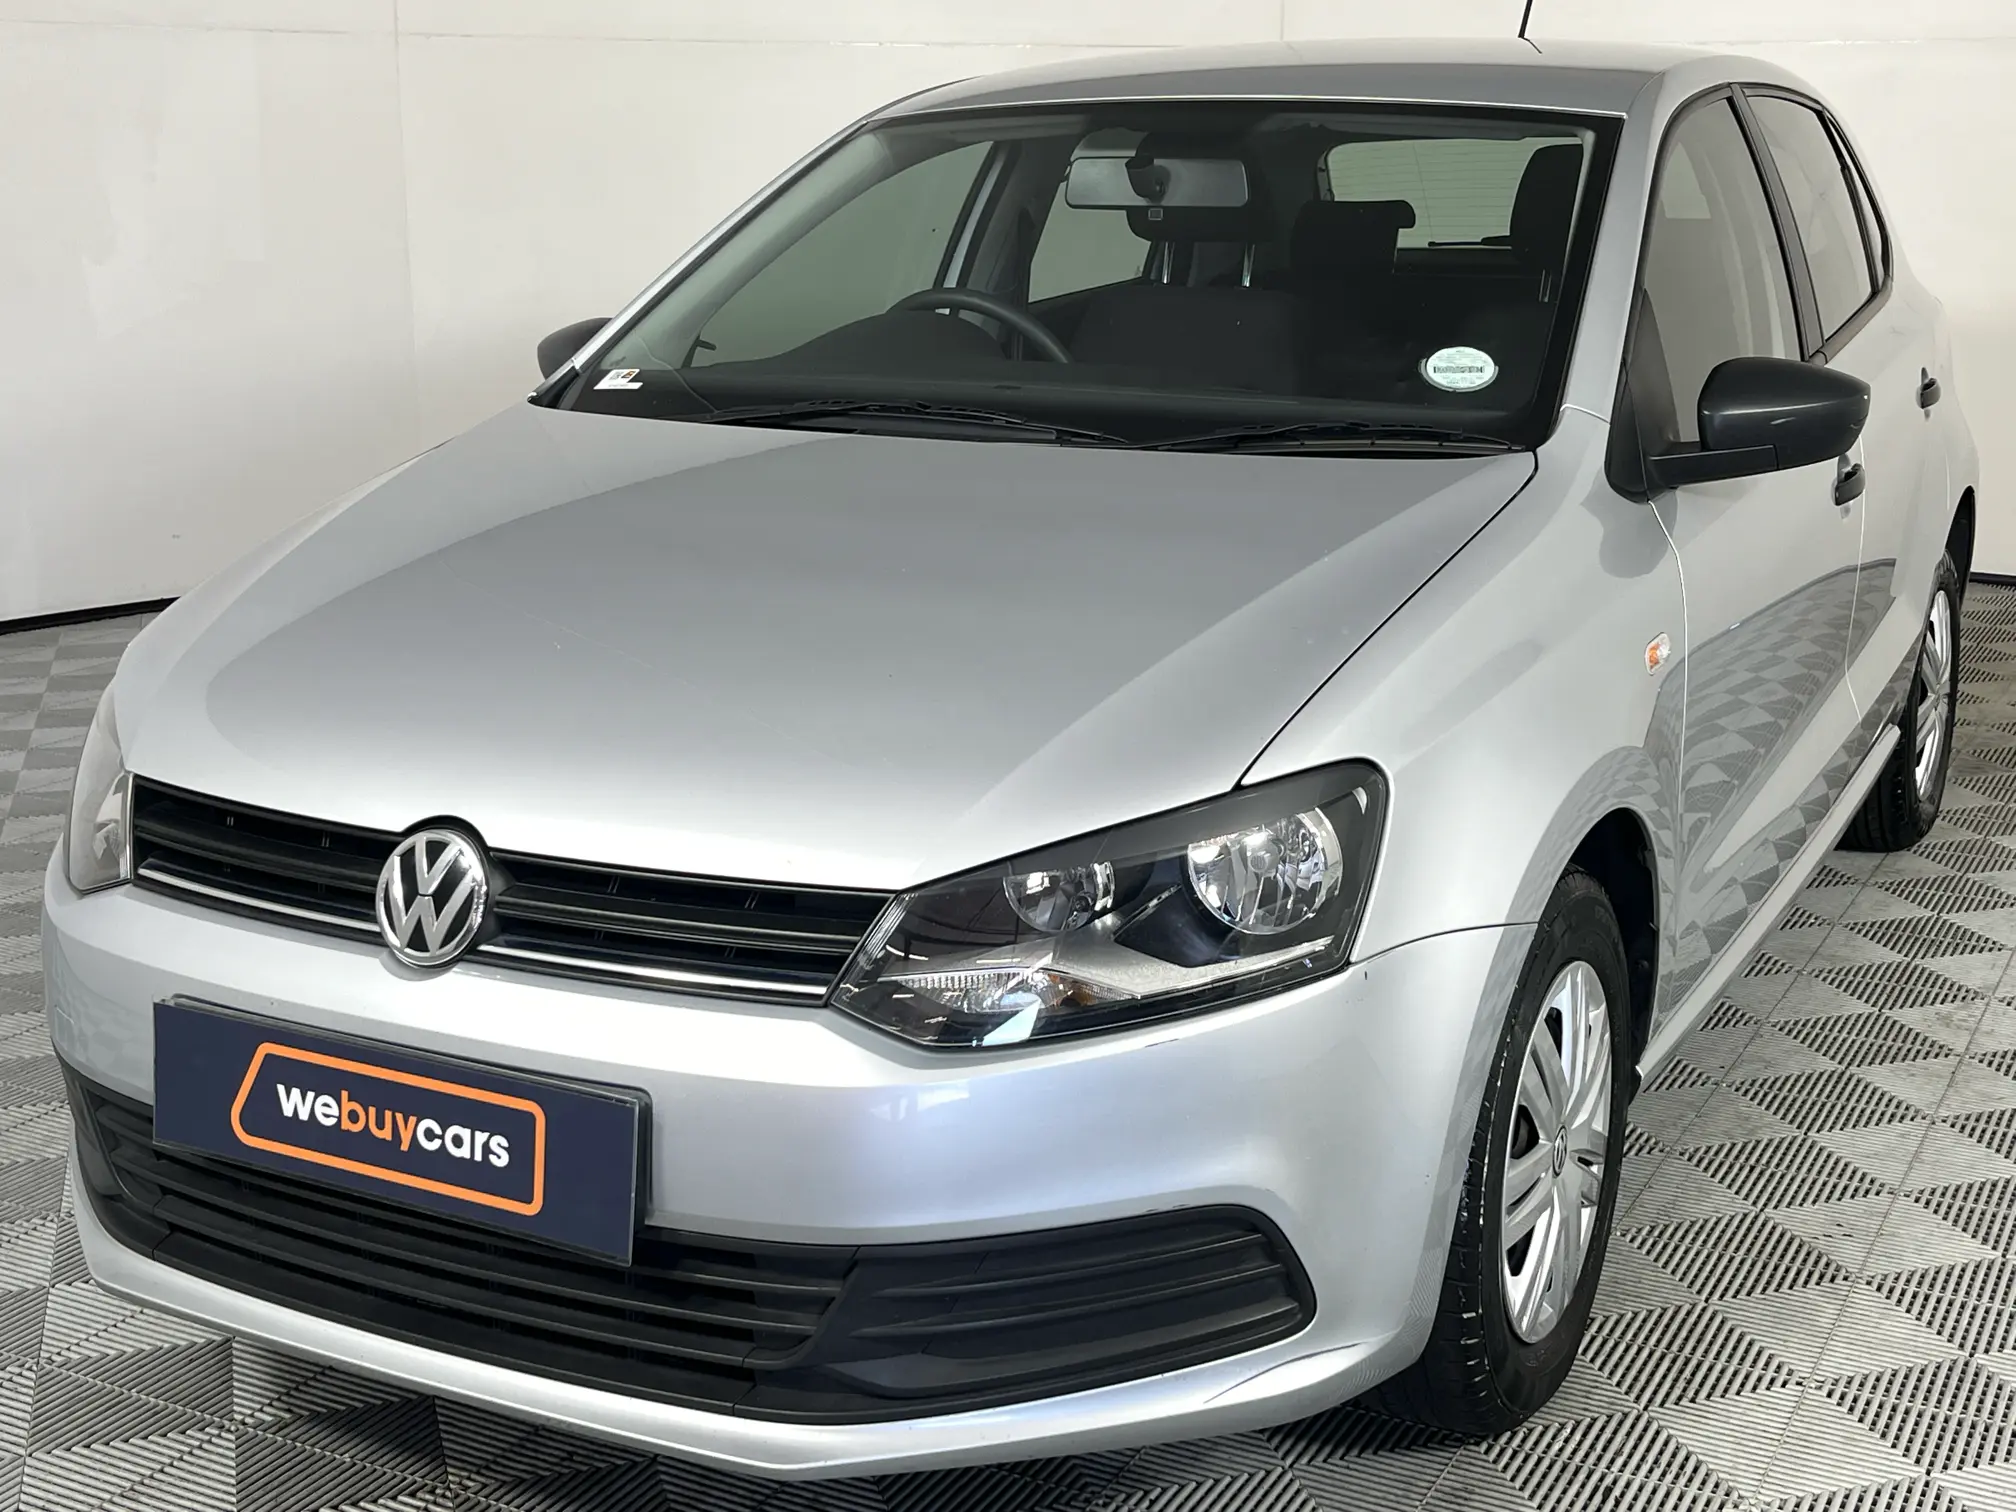 2018 Volkswagen Polo Vivo 1.4 Trendline (5dr)